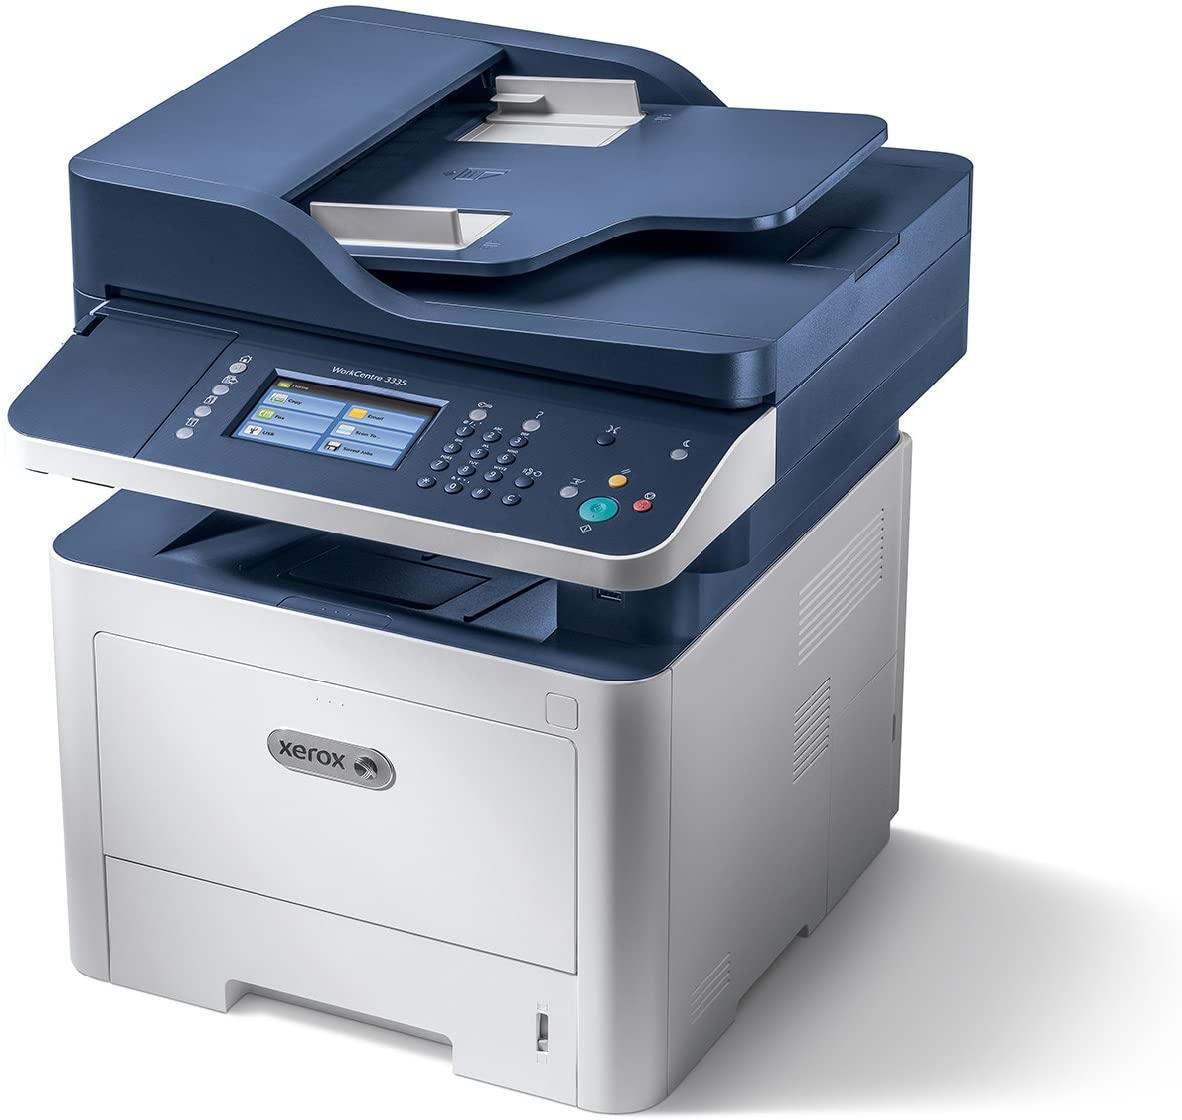 Xerox OEM WorkCentre 3335dni MFP Printer